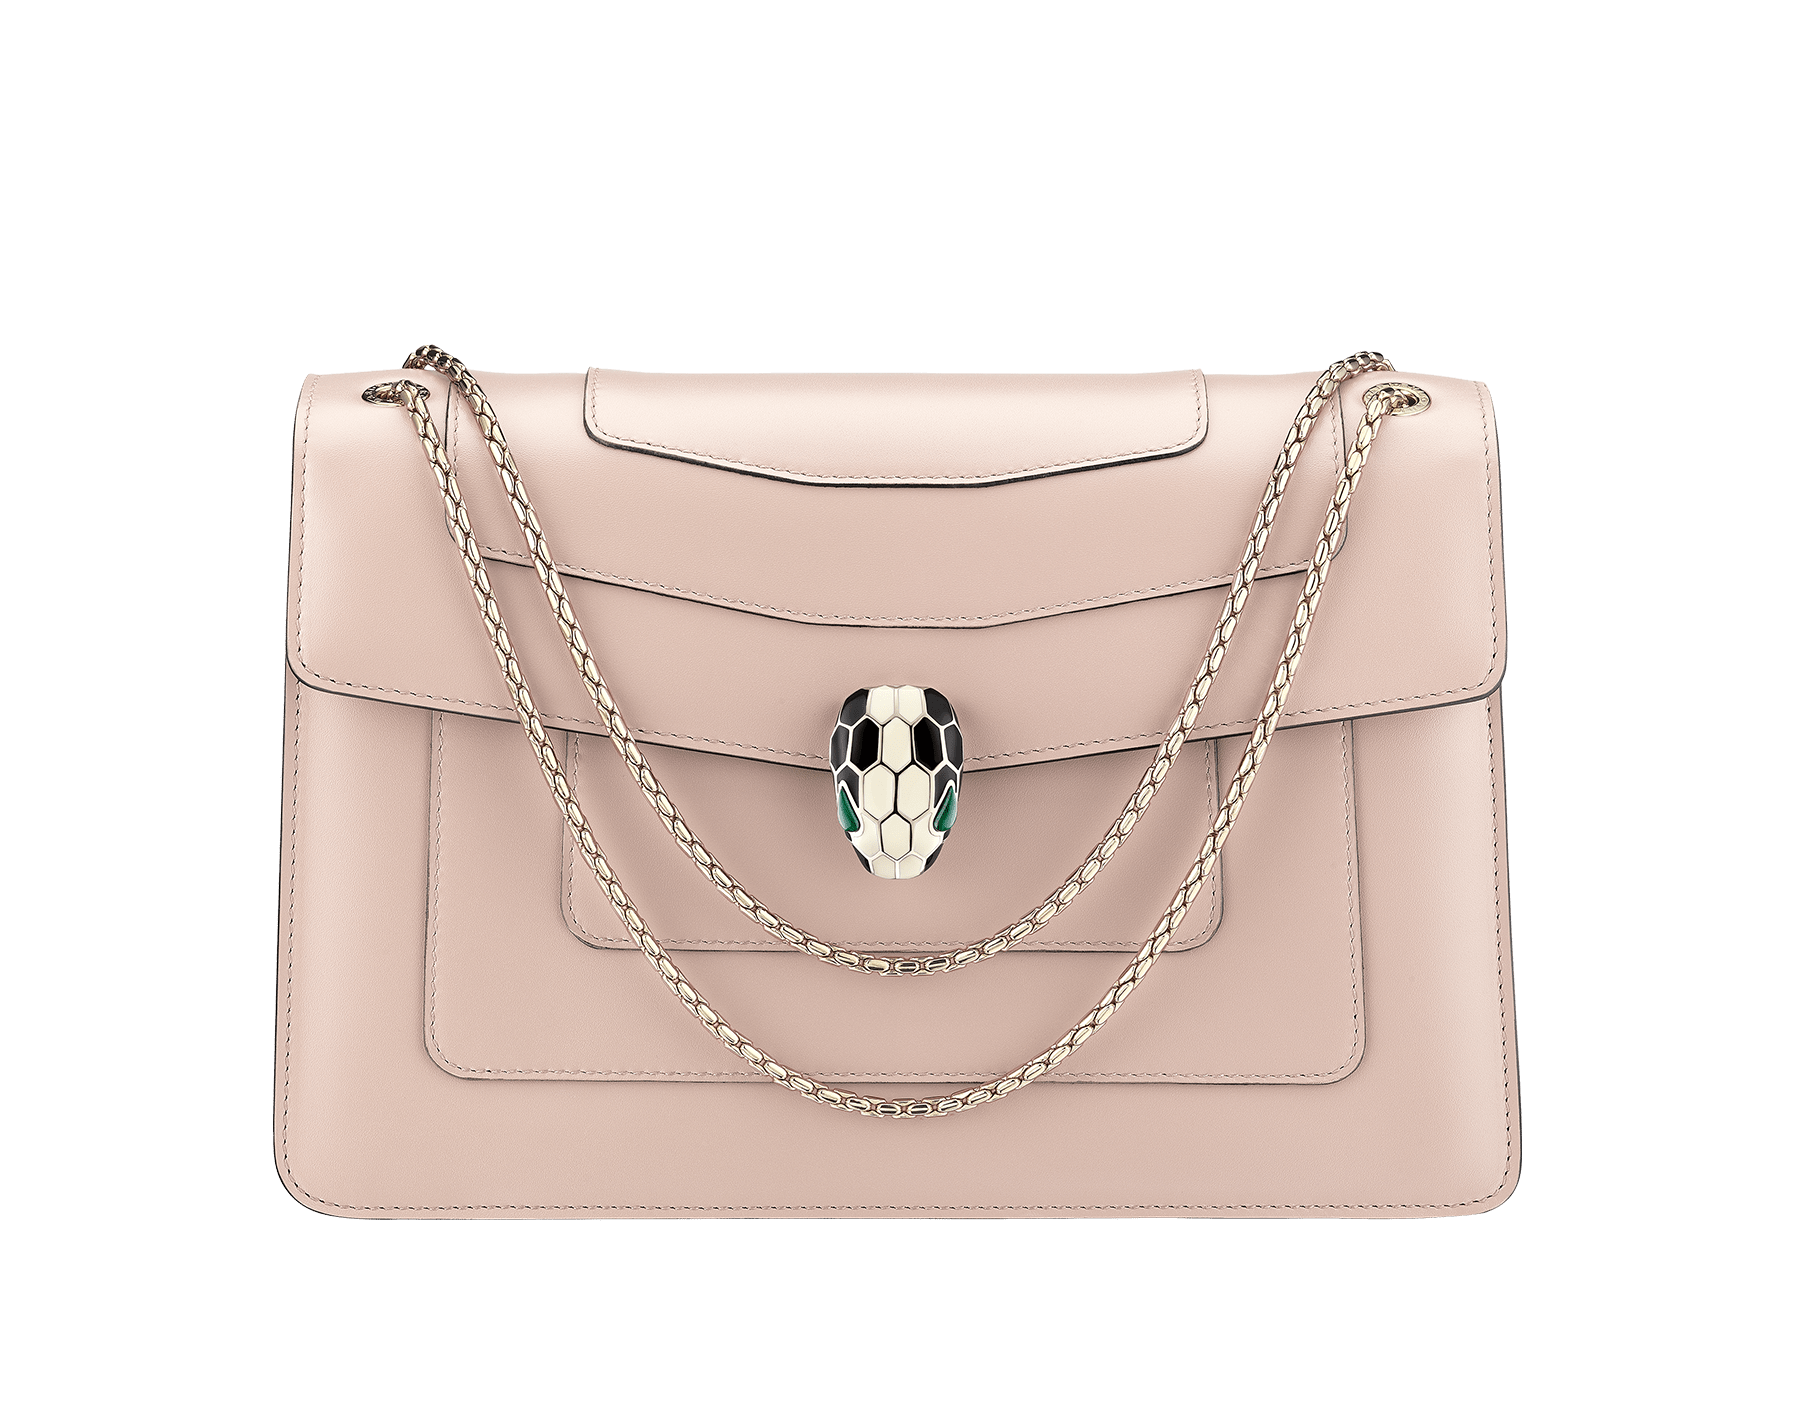 bvlgari pink handbag